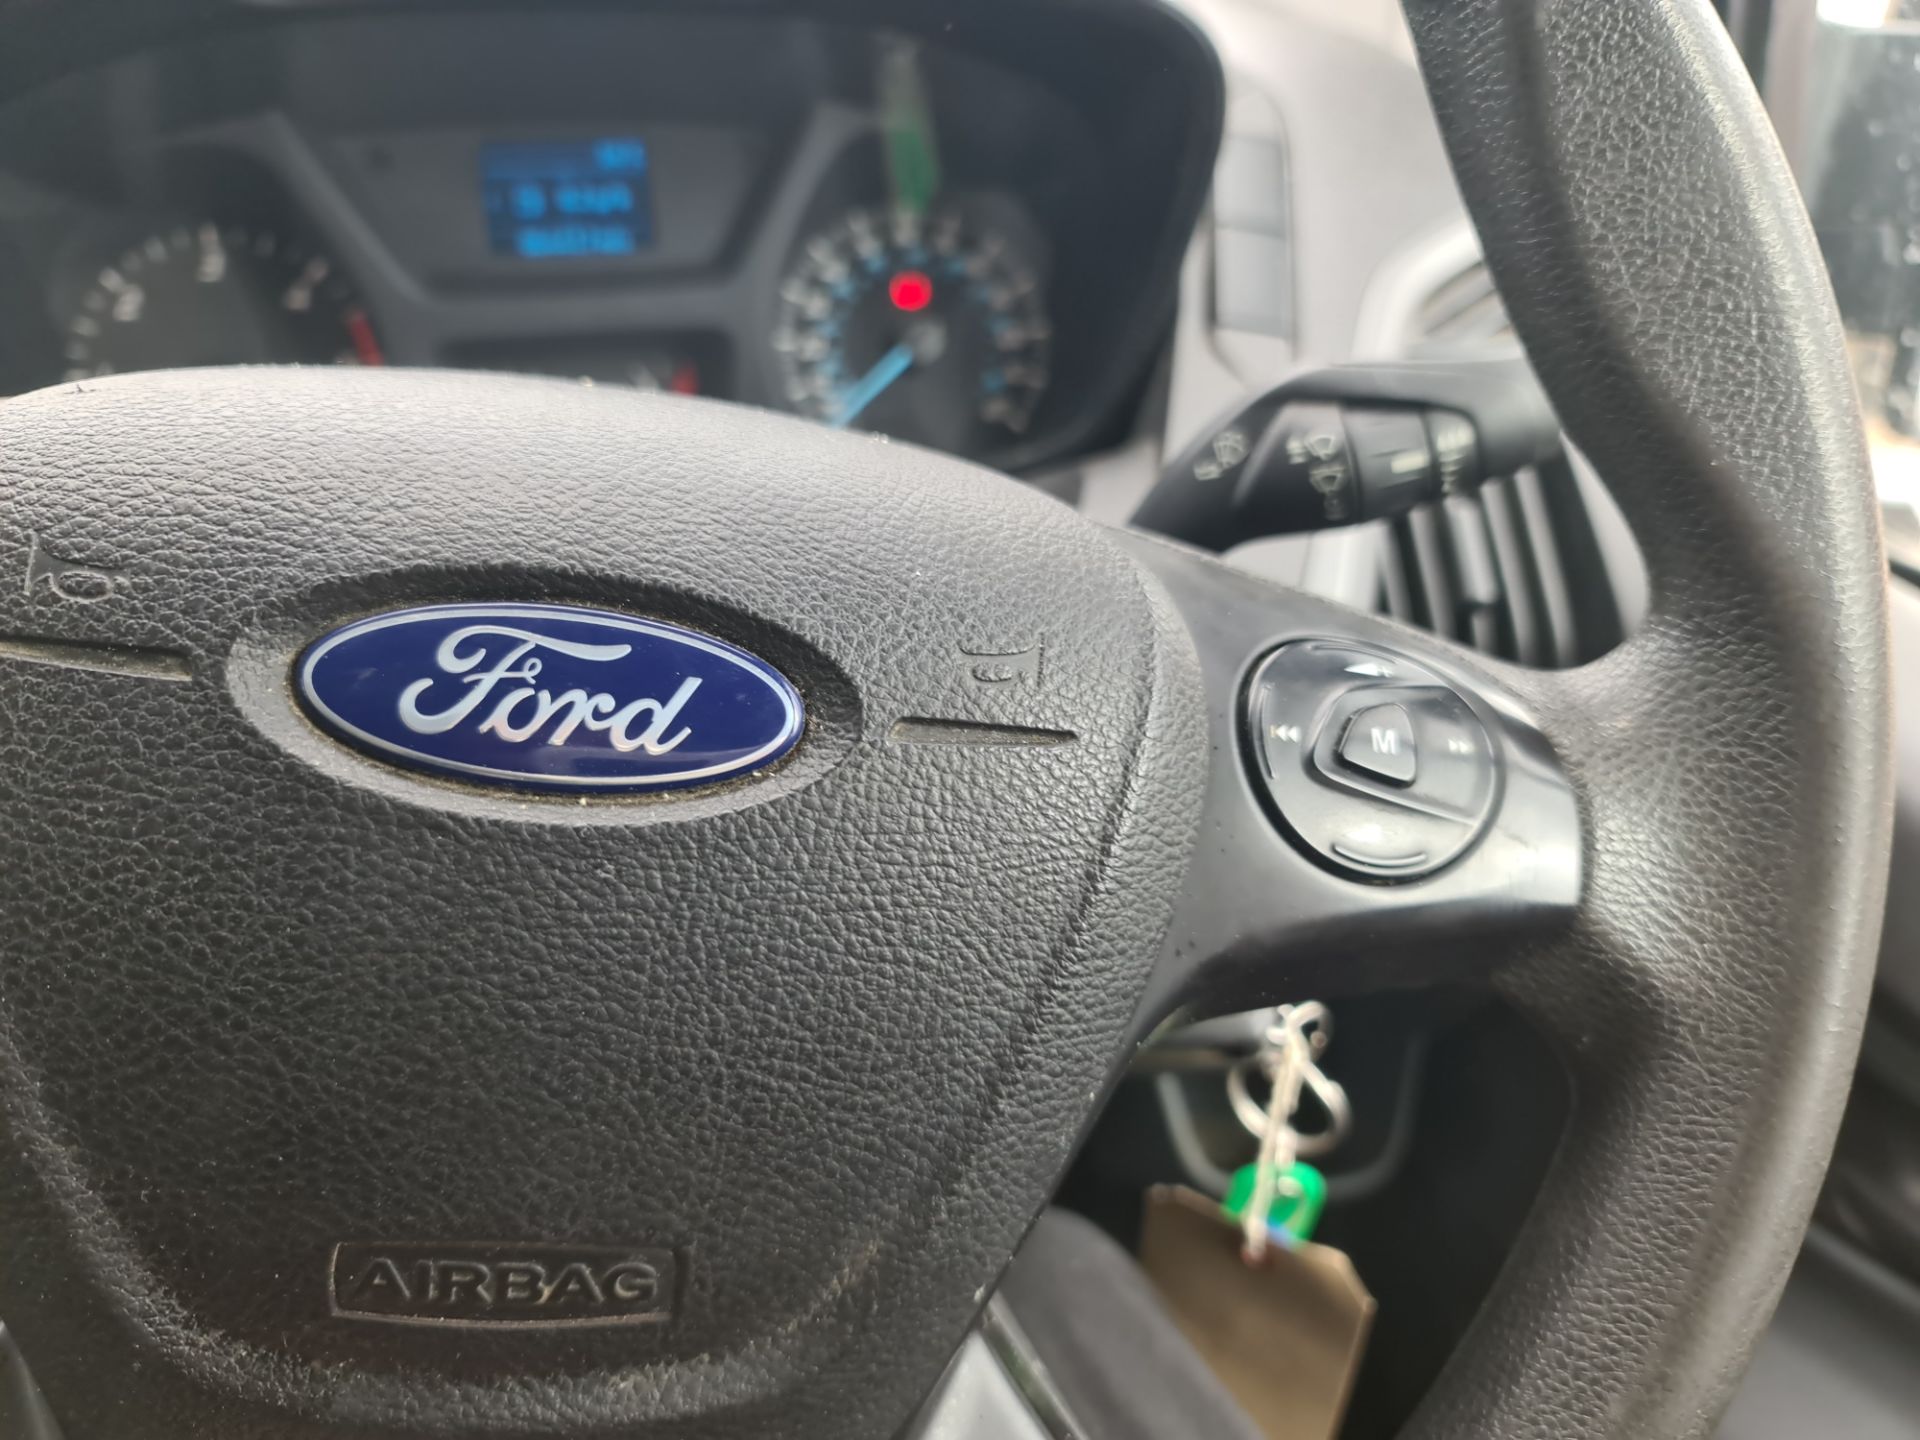 2018 Ford Transit Custom 270 panel van - Image 66 of 74